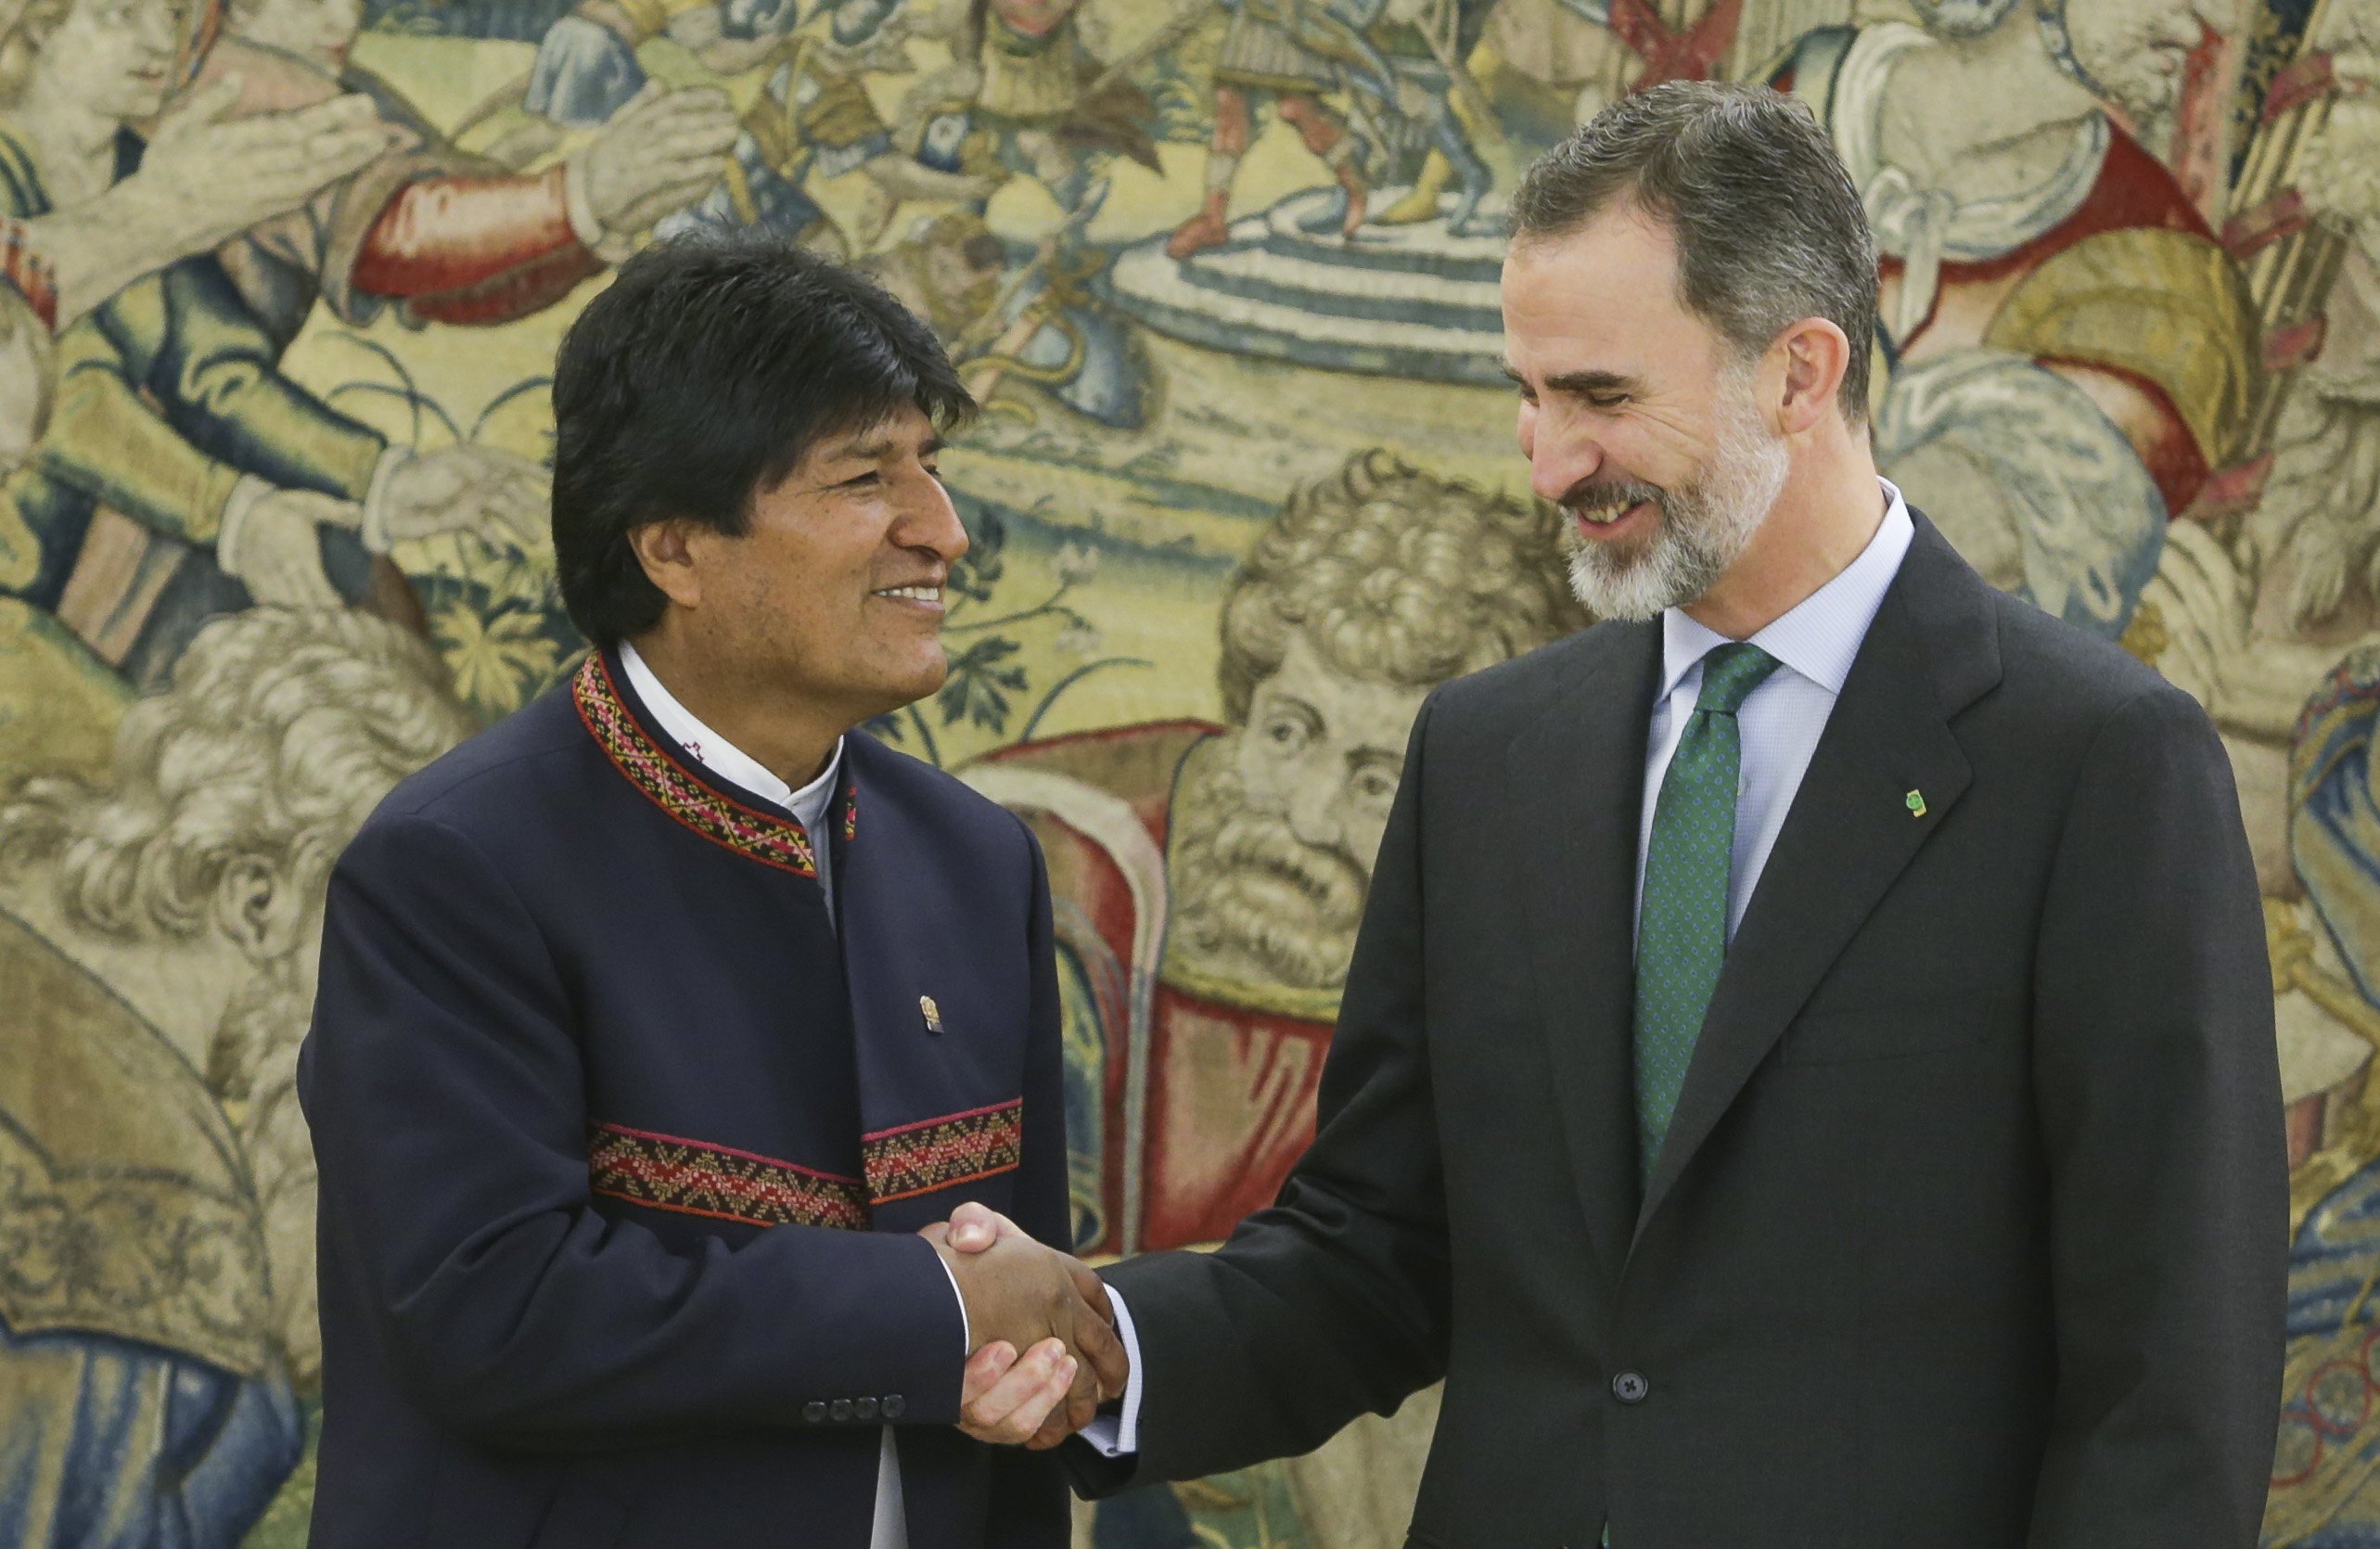 Duel d'hipocresia entre Felip VI i Evo Morales a la Zarzuela